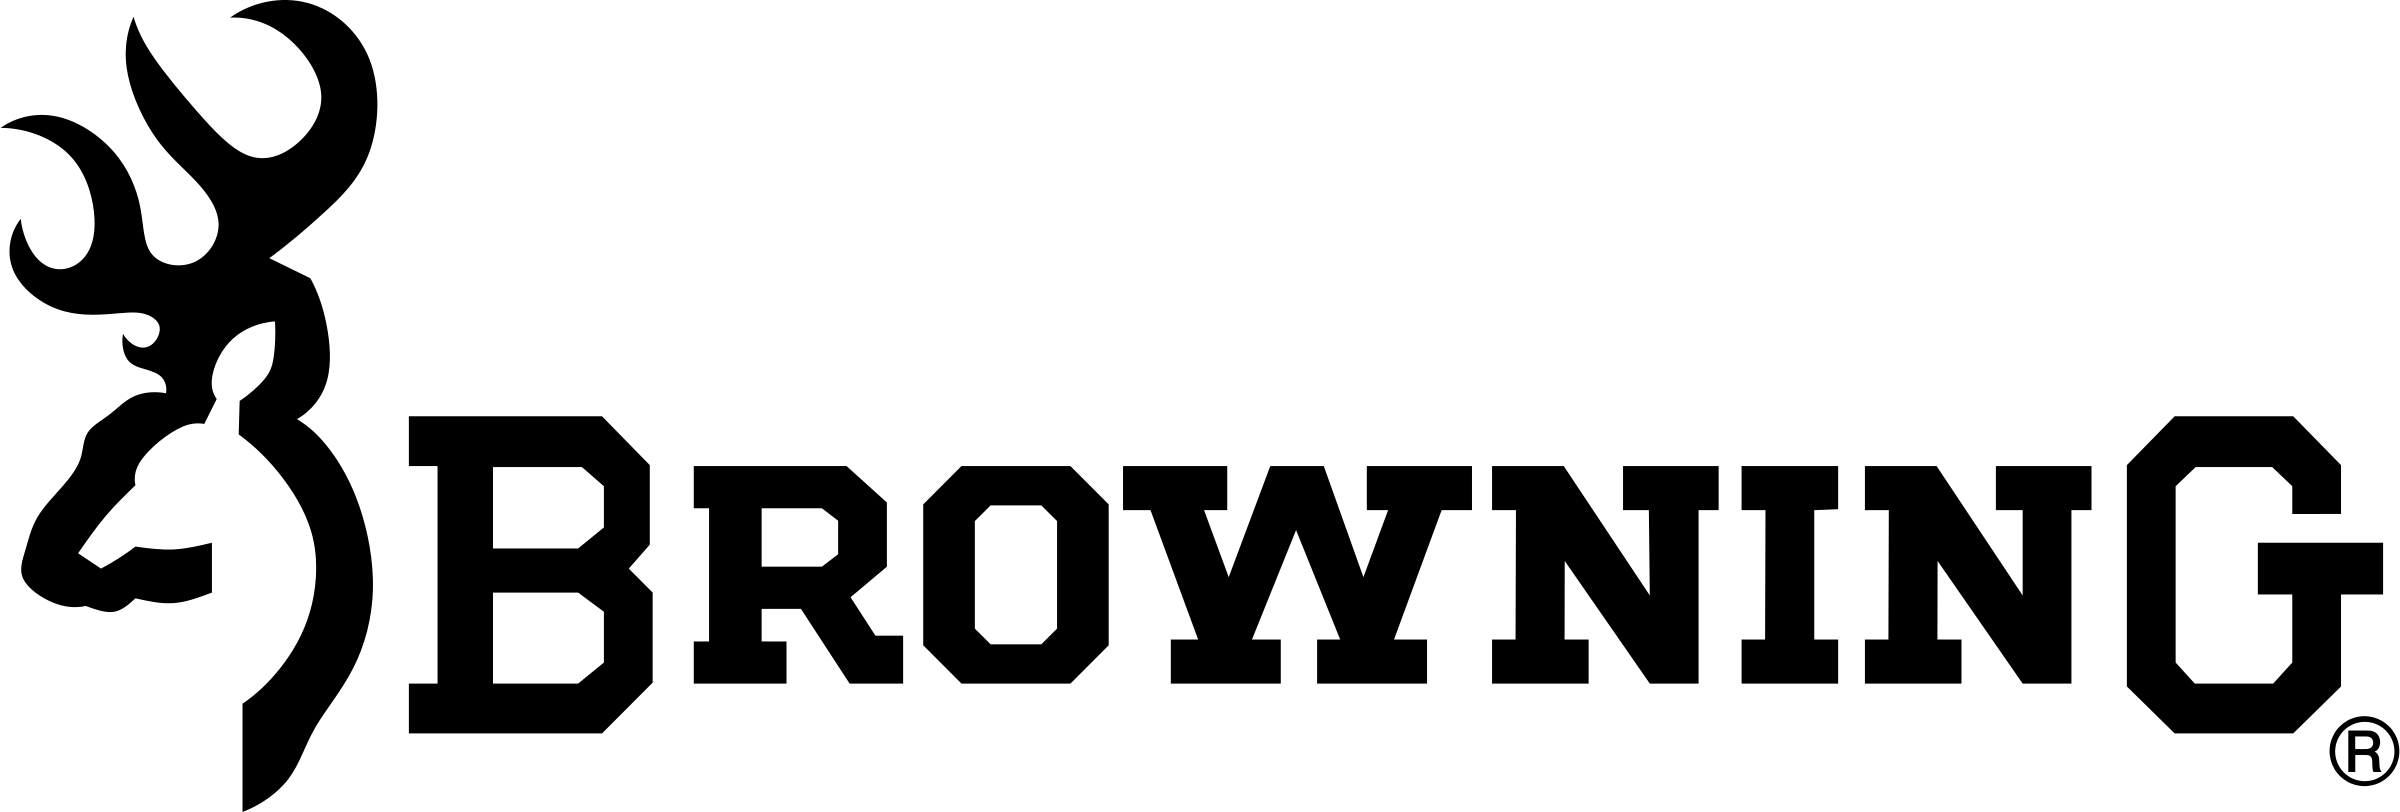 White Browning Logo - Browning Logo PNG Transparent & SVG Vector